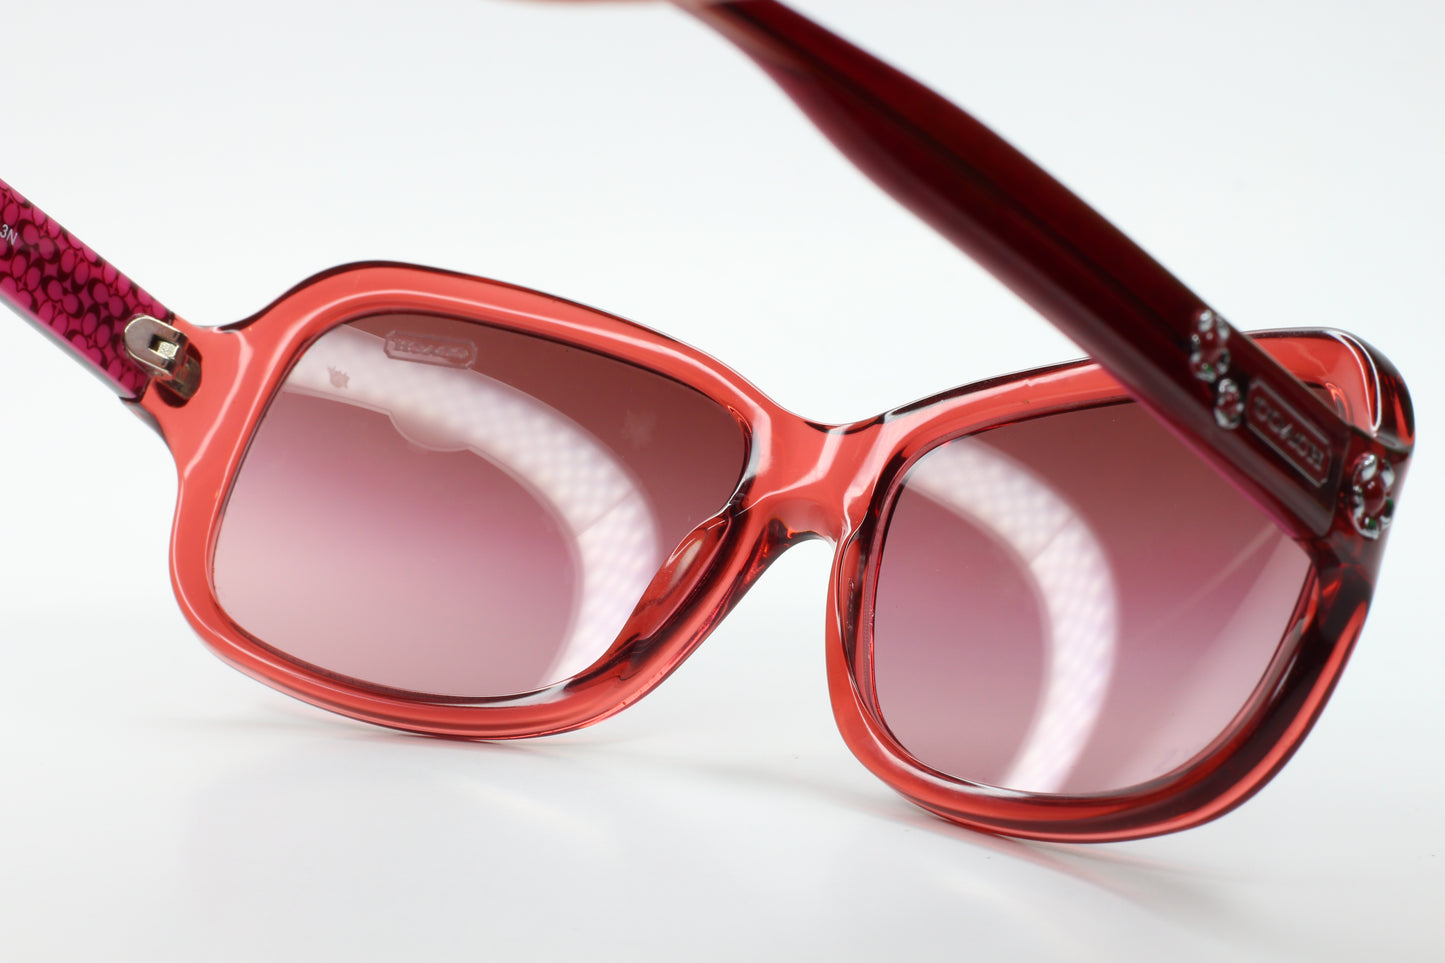 Coach Ciara HC8016 L008 5032/8H Burgundy Transparent Authentic Luxury Sunglasses - ABC Optical